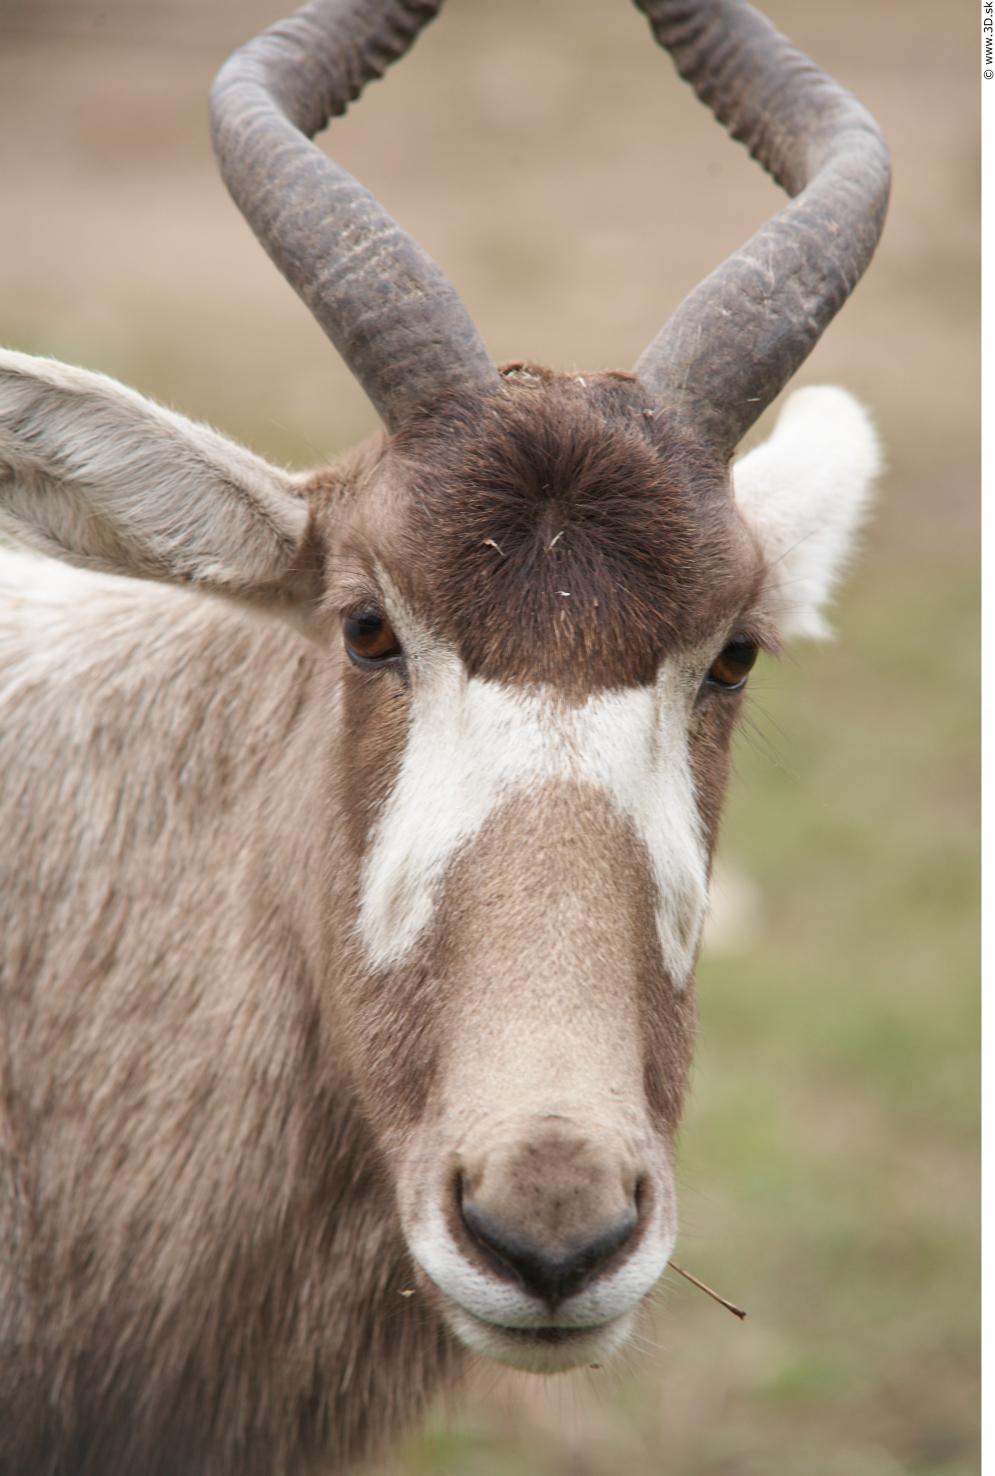 Image from Antelope animal photo references - 272569antelope_0045.jpg